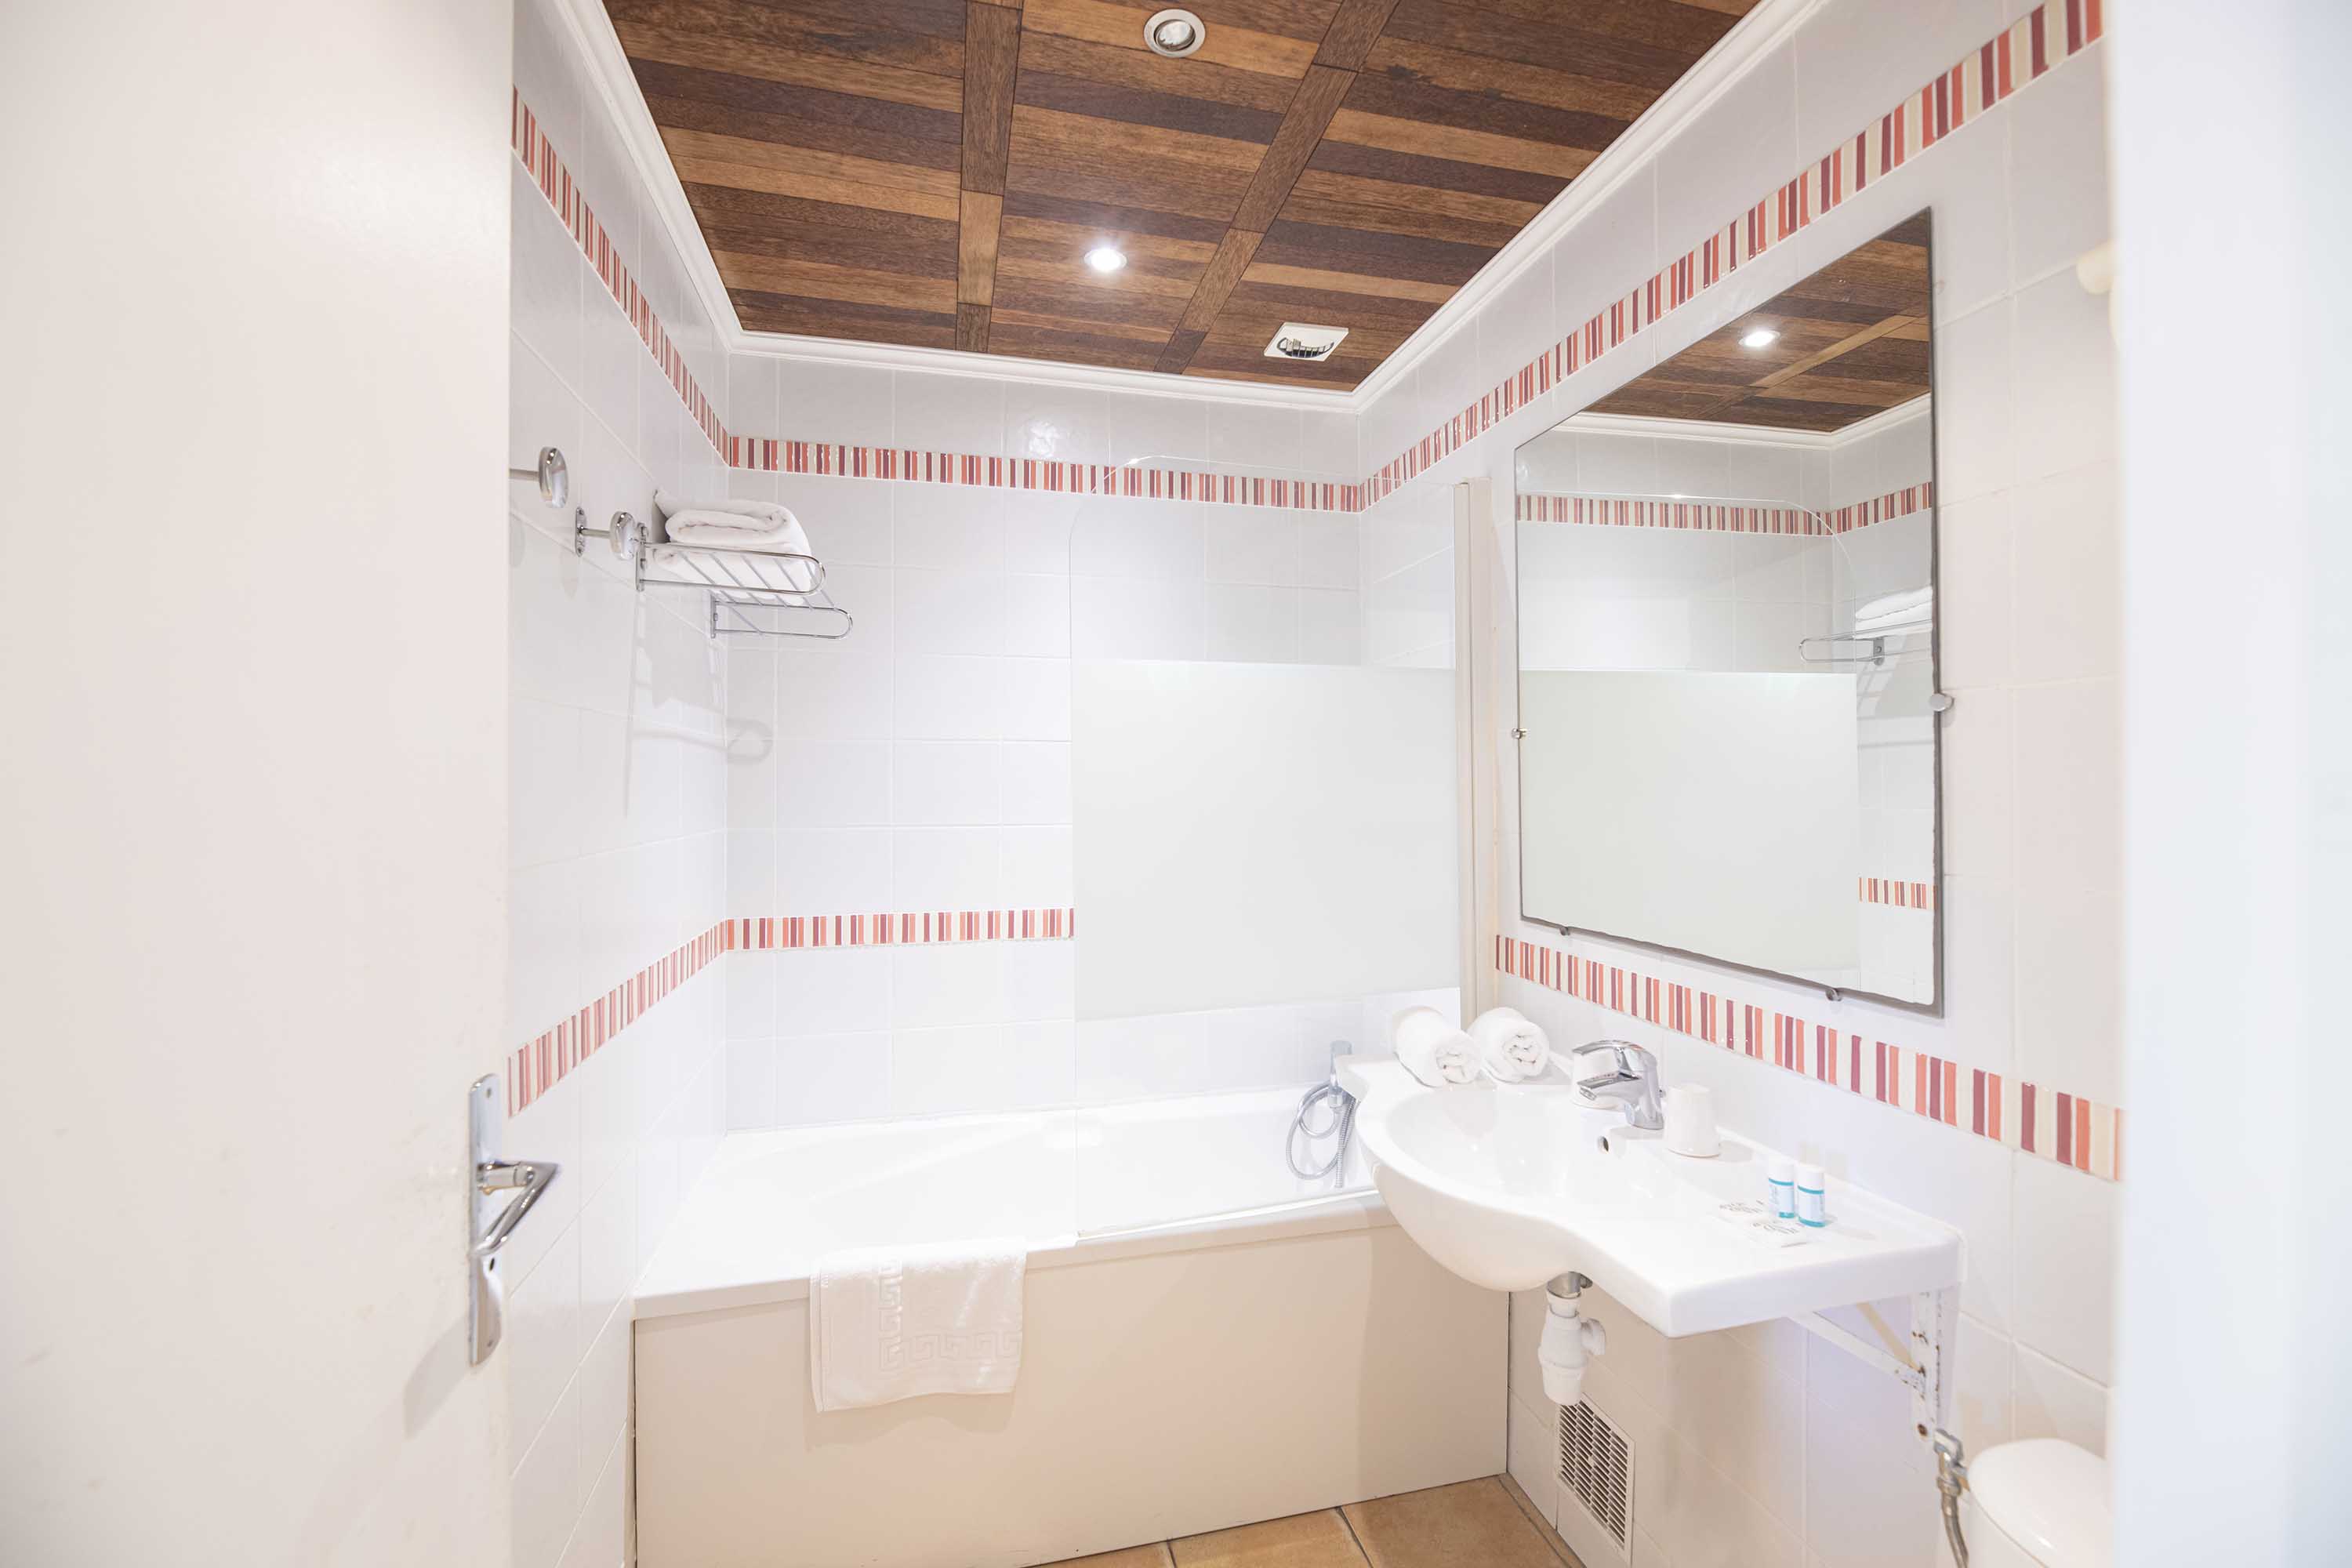 Bathroom with bathtub | Source : Hotel Le Relais des Cîmes - www.relaisdescimes.com